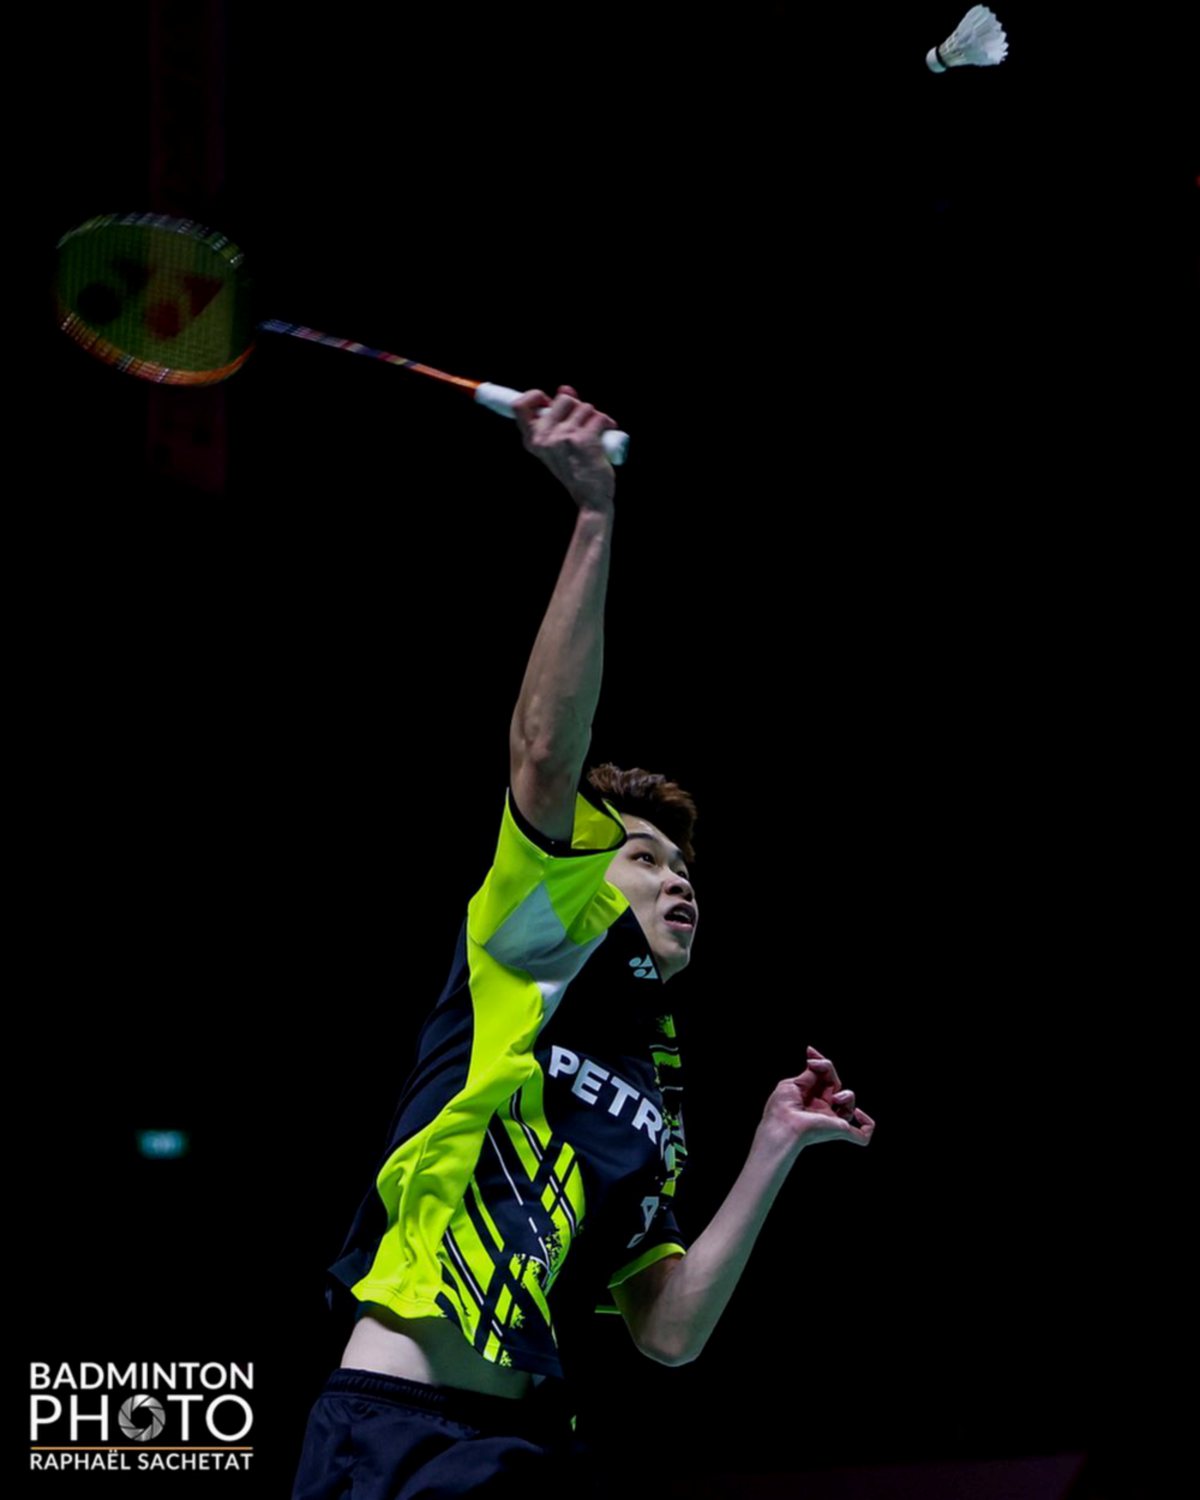 TZE Yong teruskan kemaraan. FOTO Badminton Photo